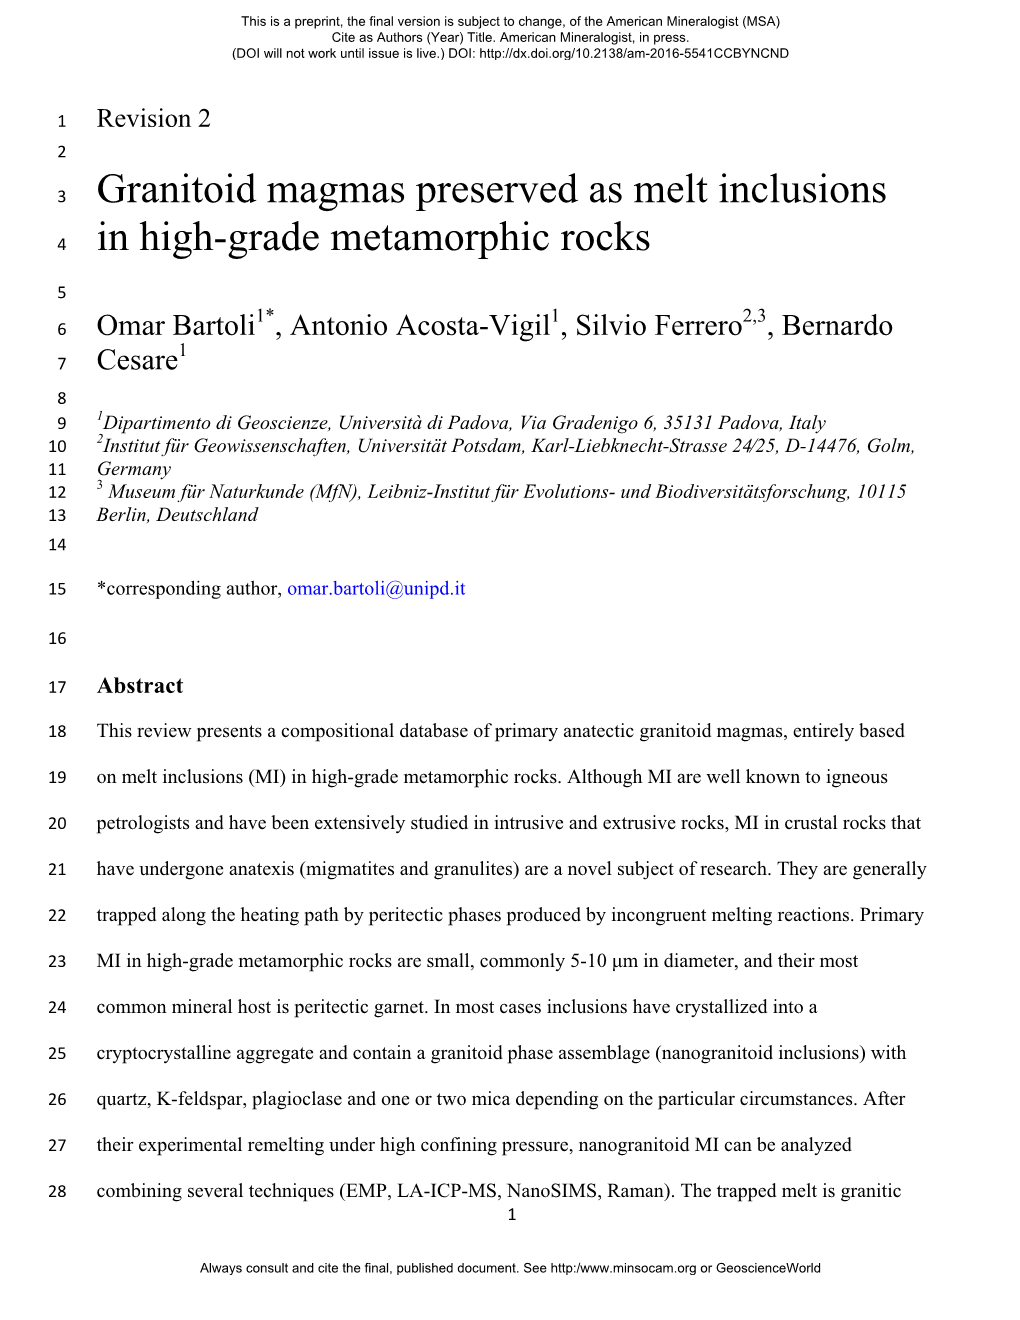 Granitoid Magmas Preserved As Melt Inclusions 4 in High-Grade Metamorphic Rocks